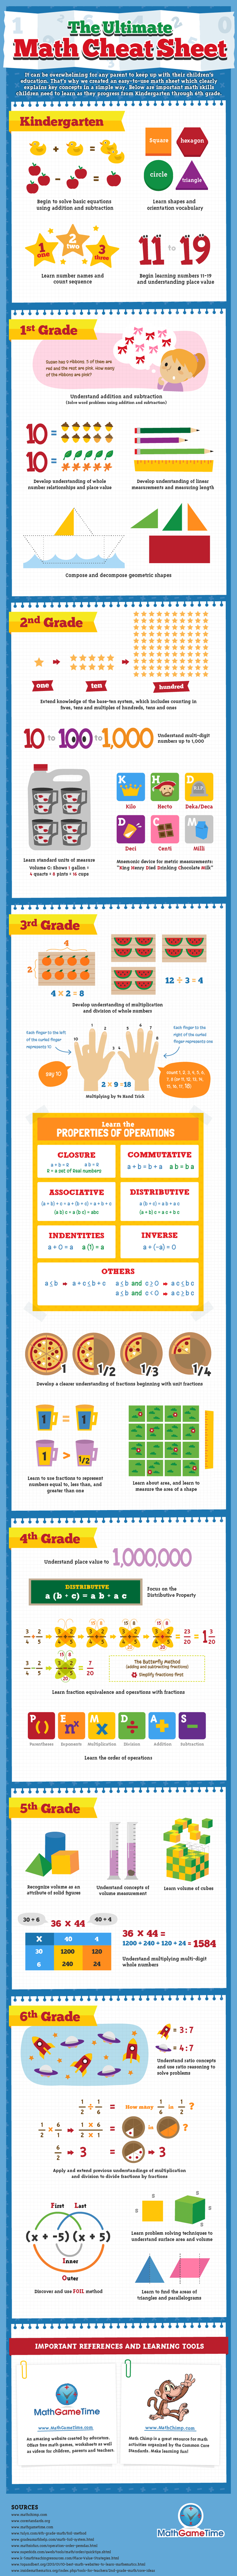 math-cheat-sheet-infographic